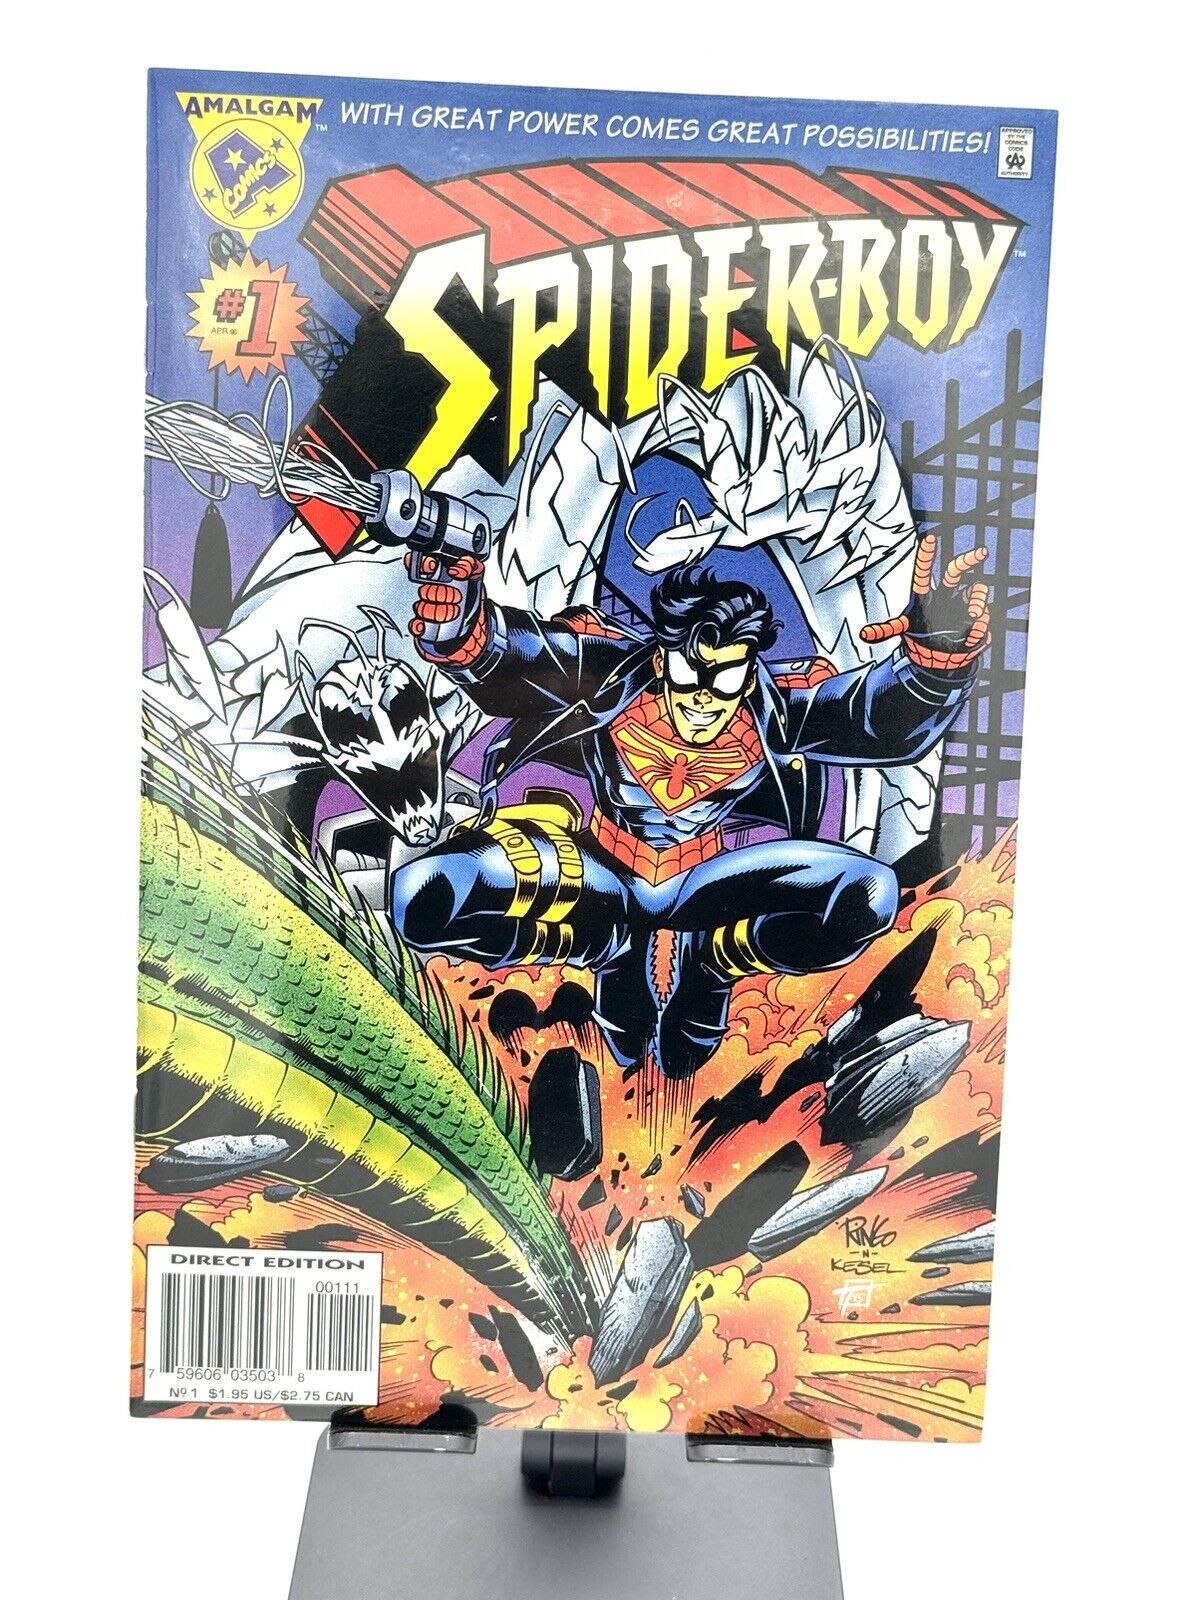 1996 Amalgam Comics Spider-Boy #1